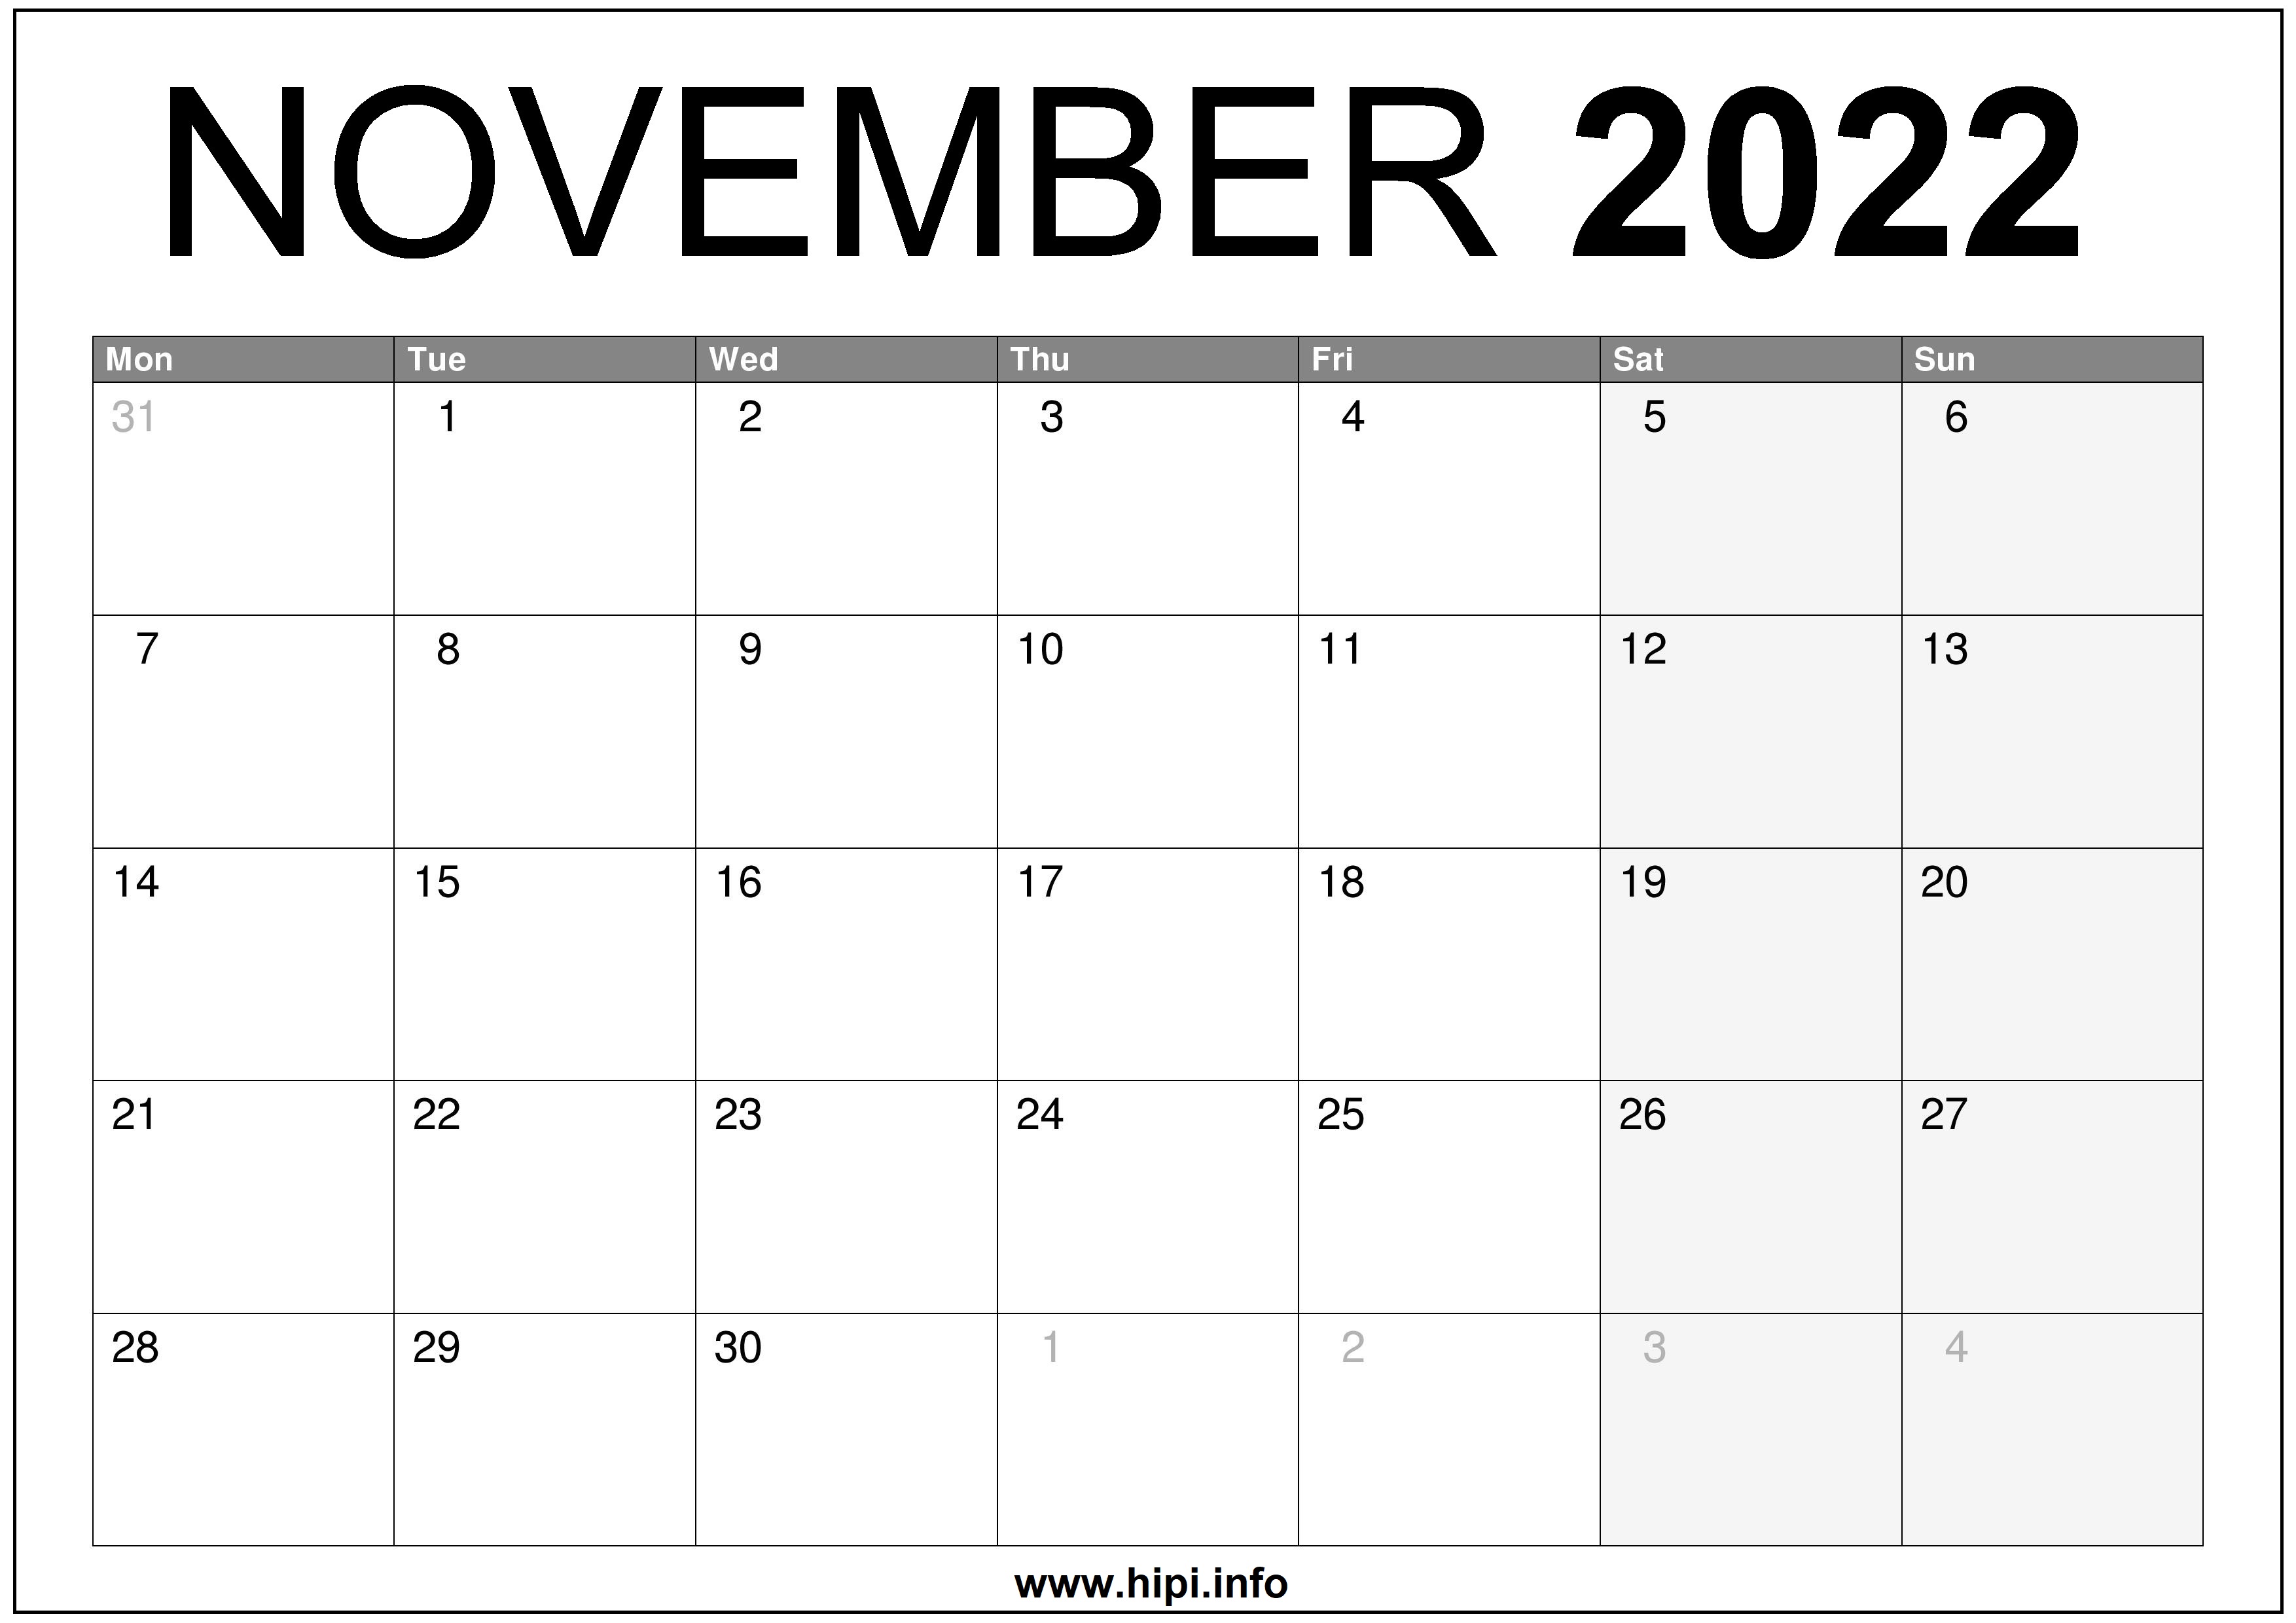 Free Printable November 2022 Calendar November 2022 Uk Calendar Printable Free - Hipi.info | Calendars Printable  Free